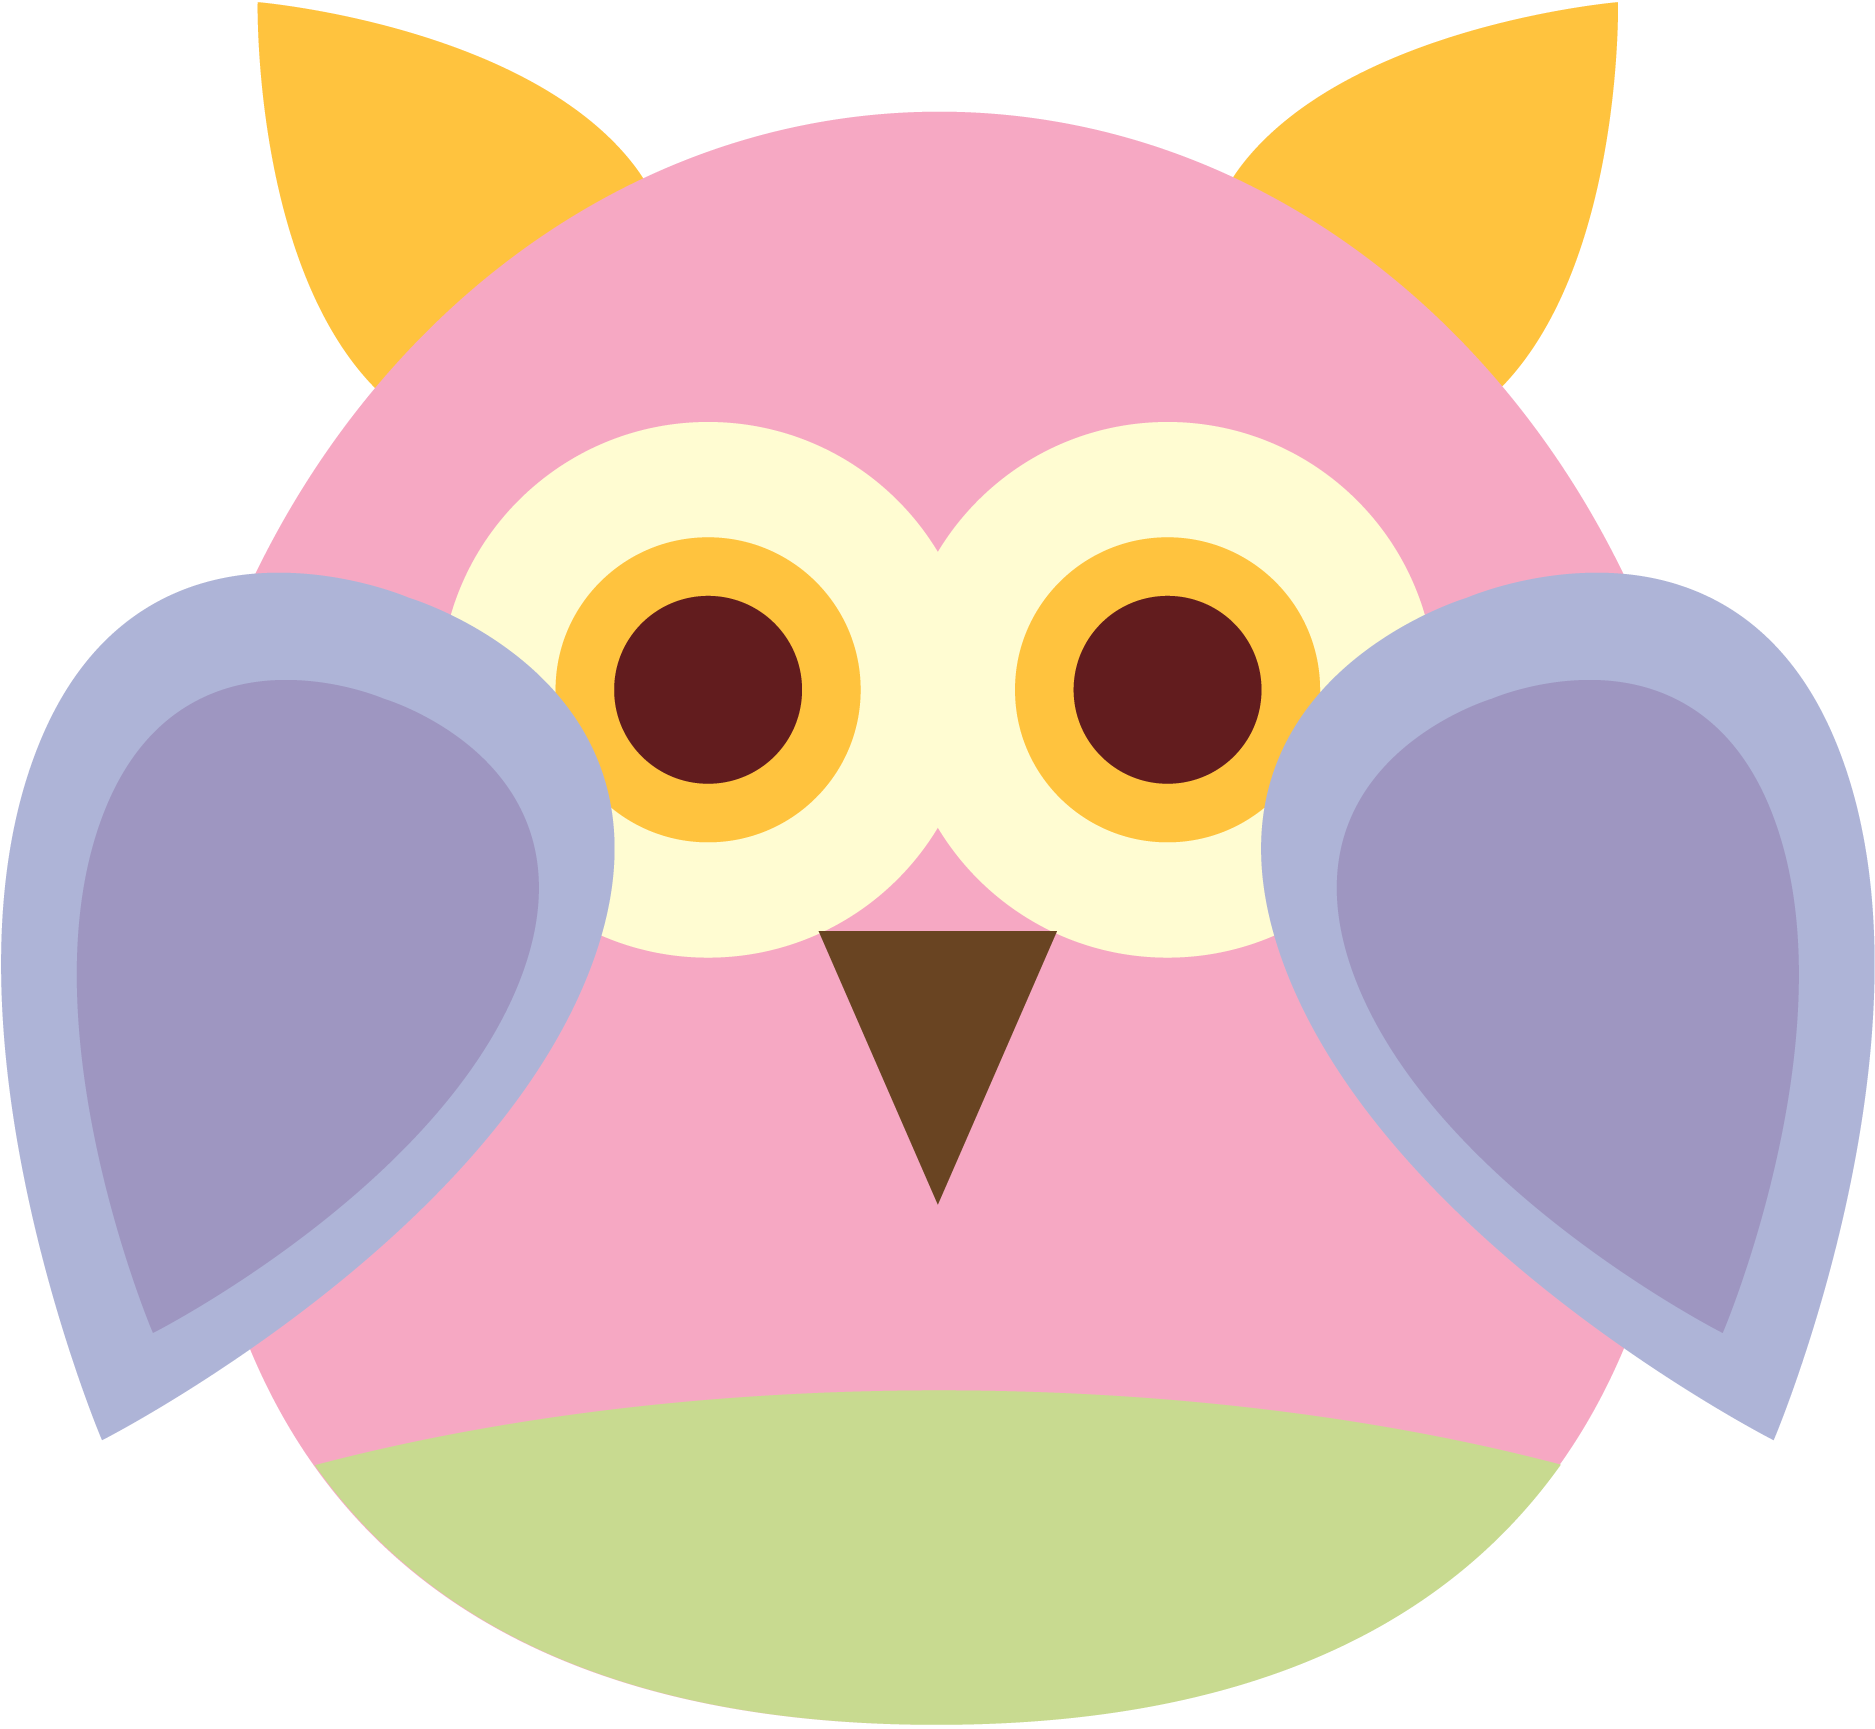 Cute owl clipart free download - ClipartFox